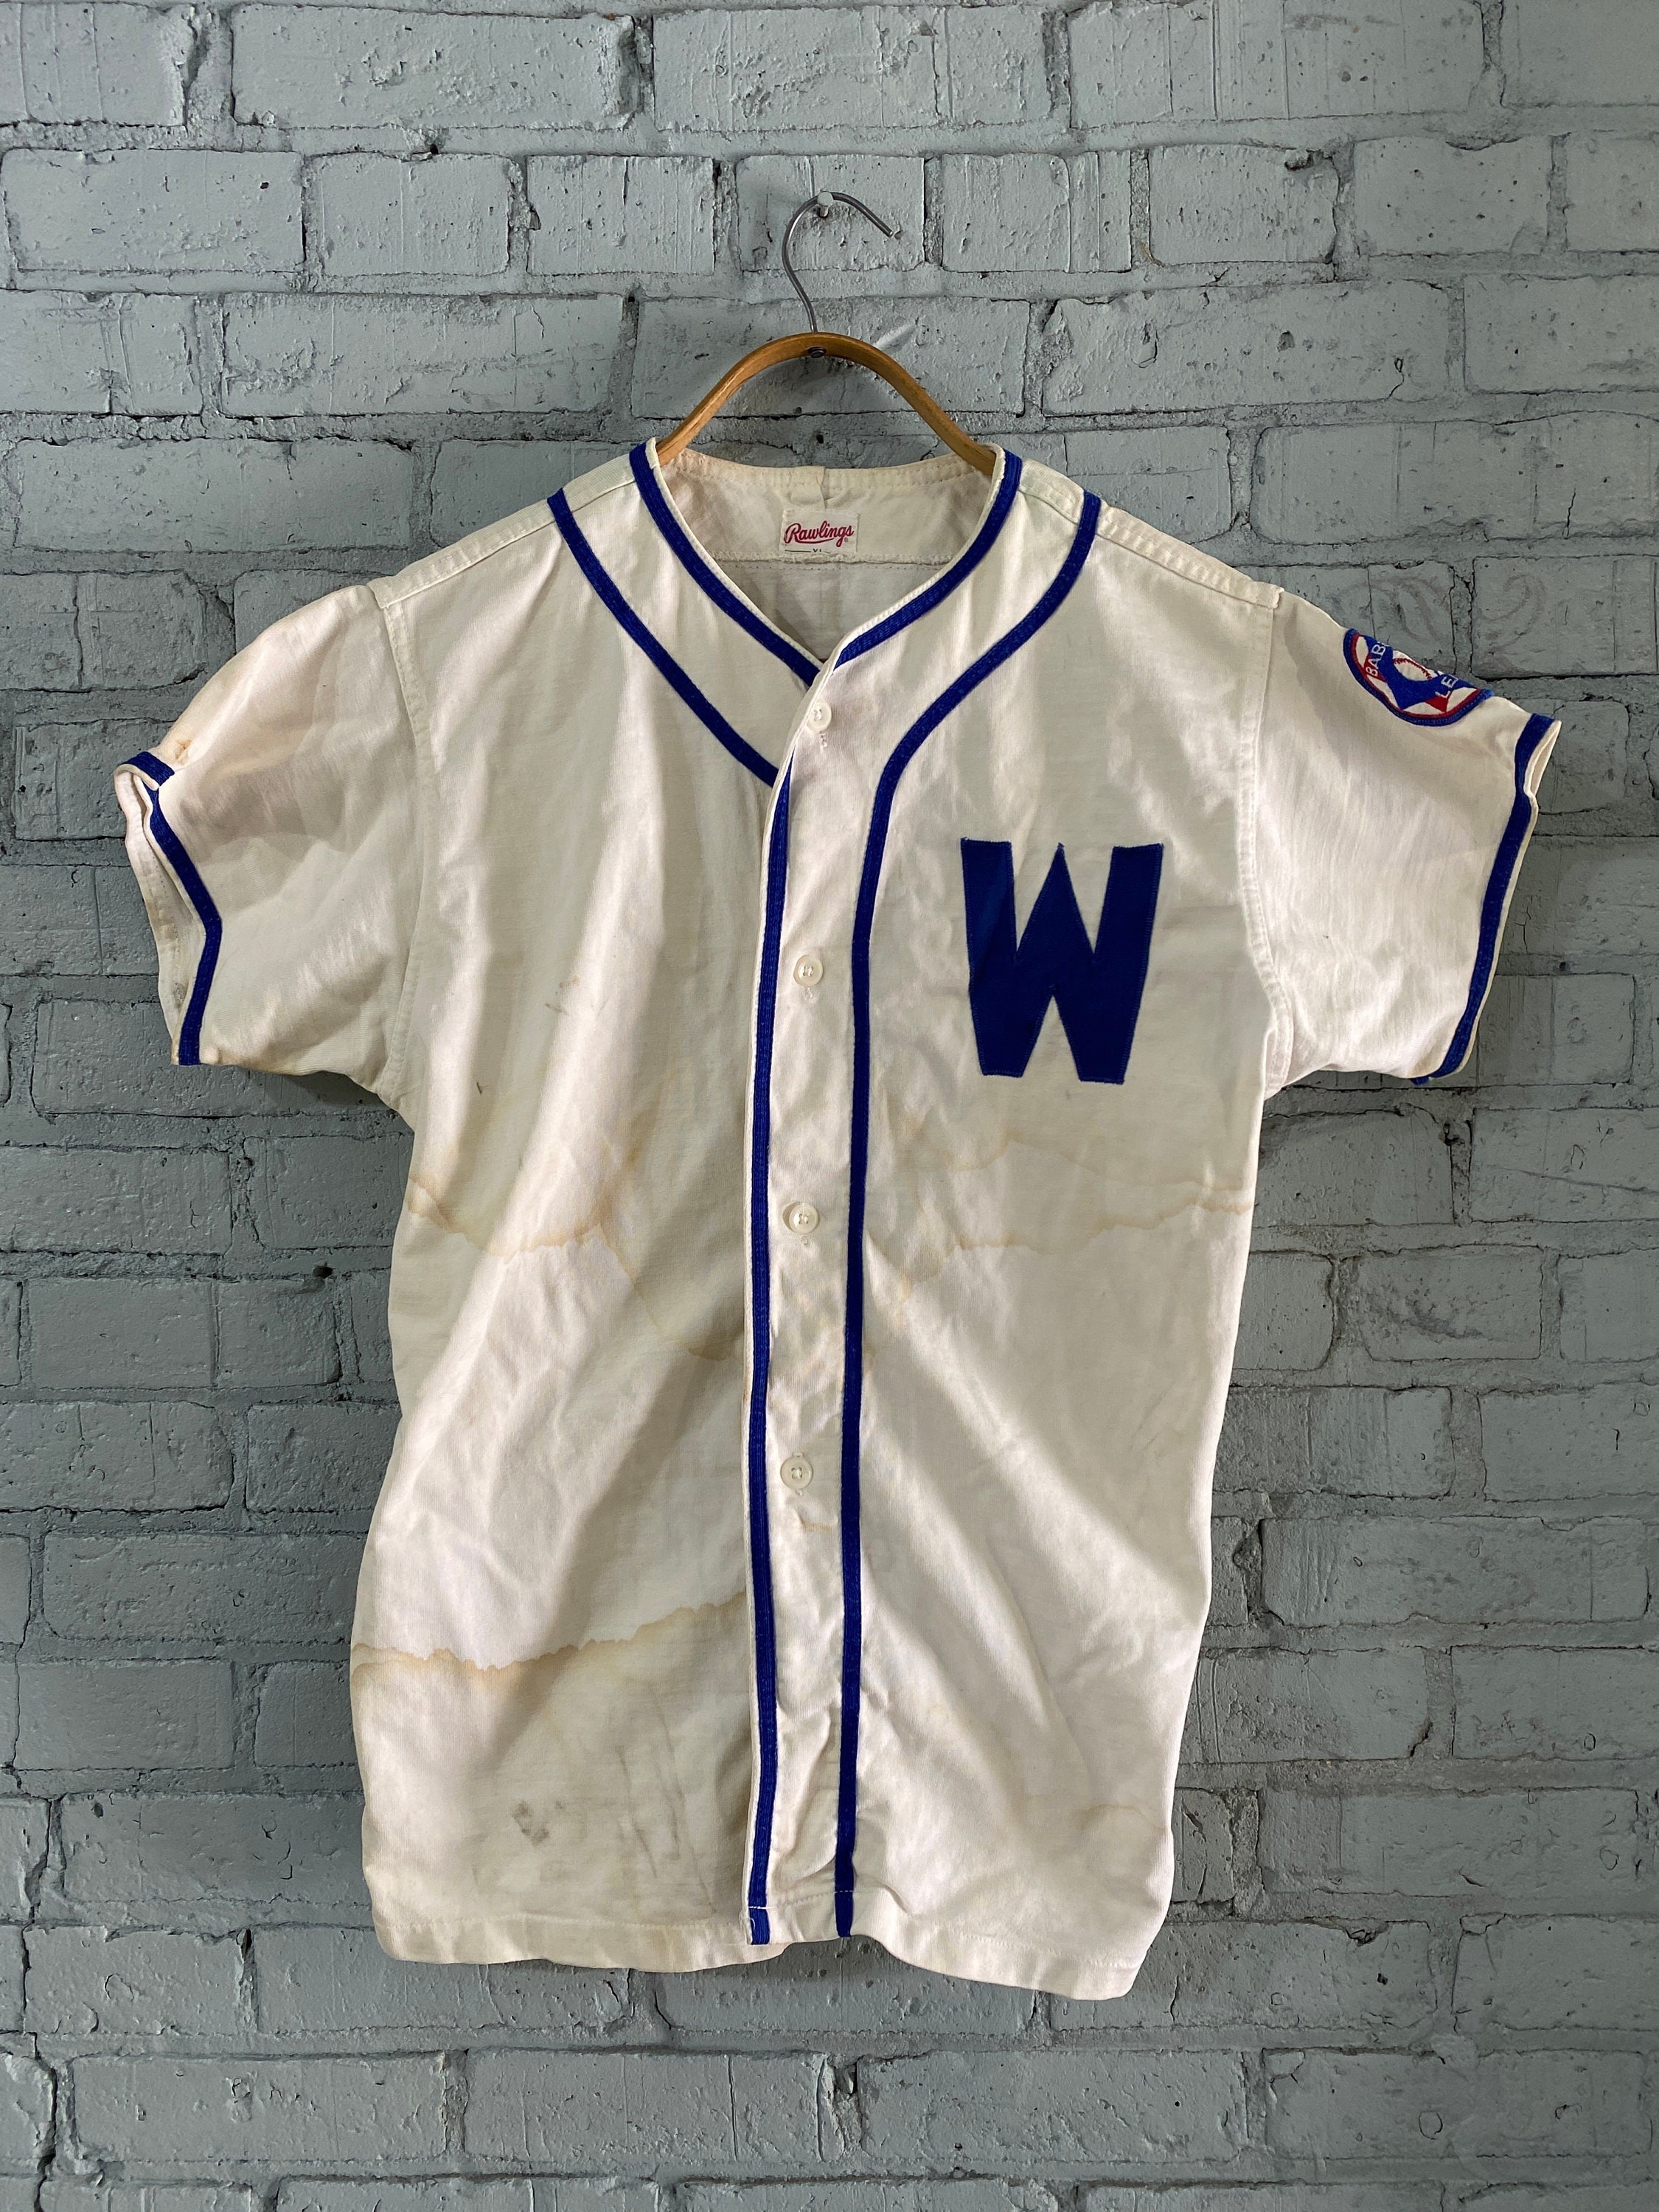 Vintage 1960's Babe Ruth League Baseball Uniform Jersey -  Sweden